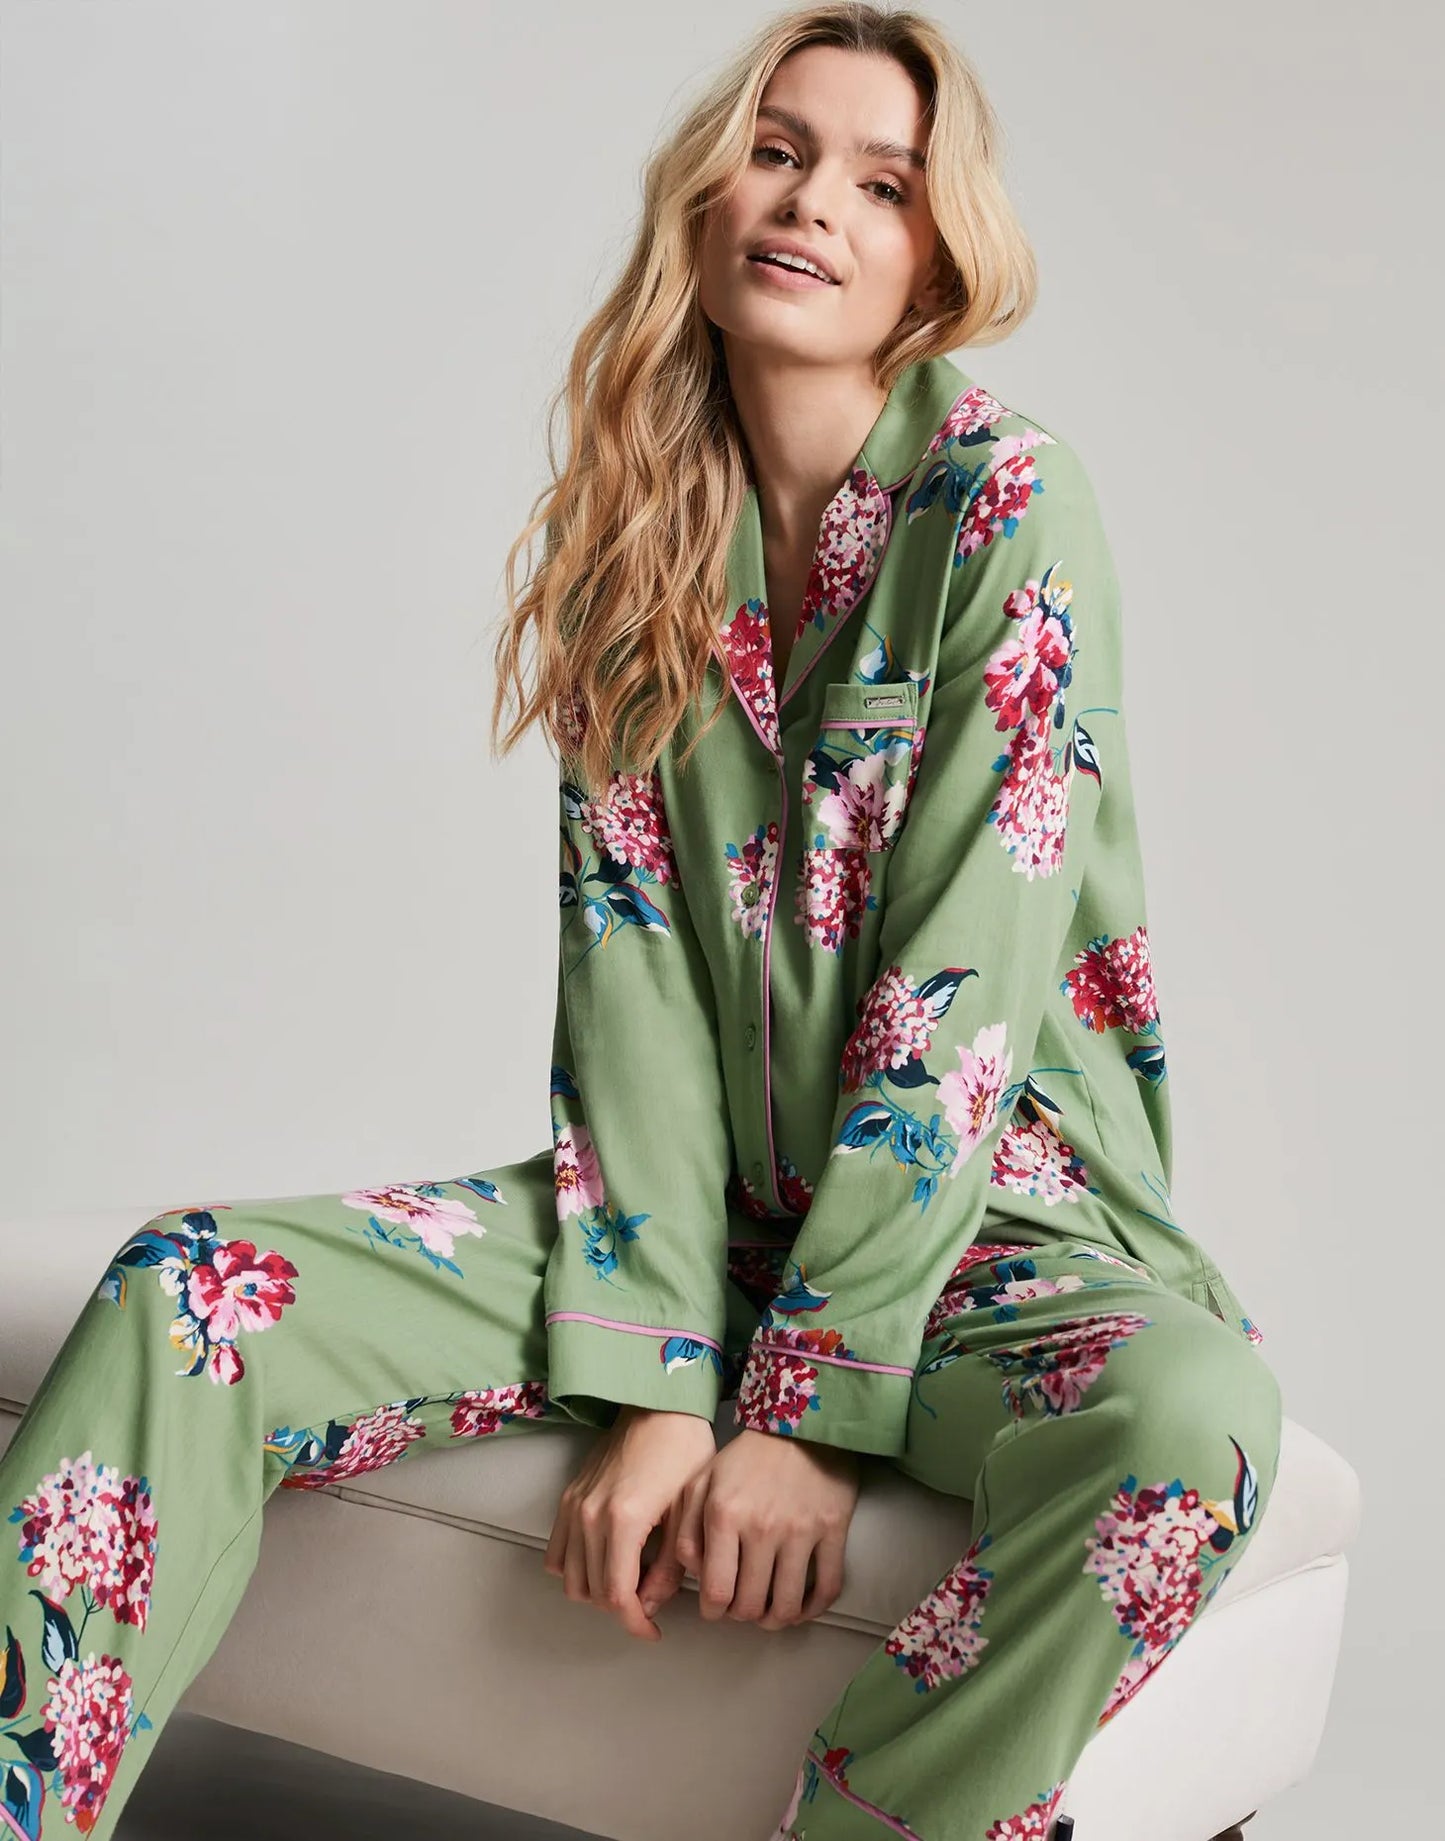 Sleeptight Pyjama Set - Posy Green